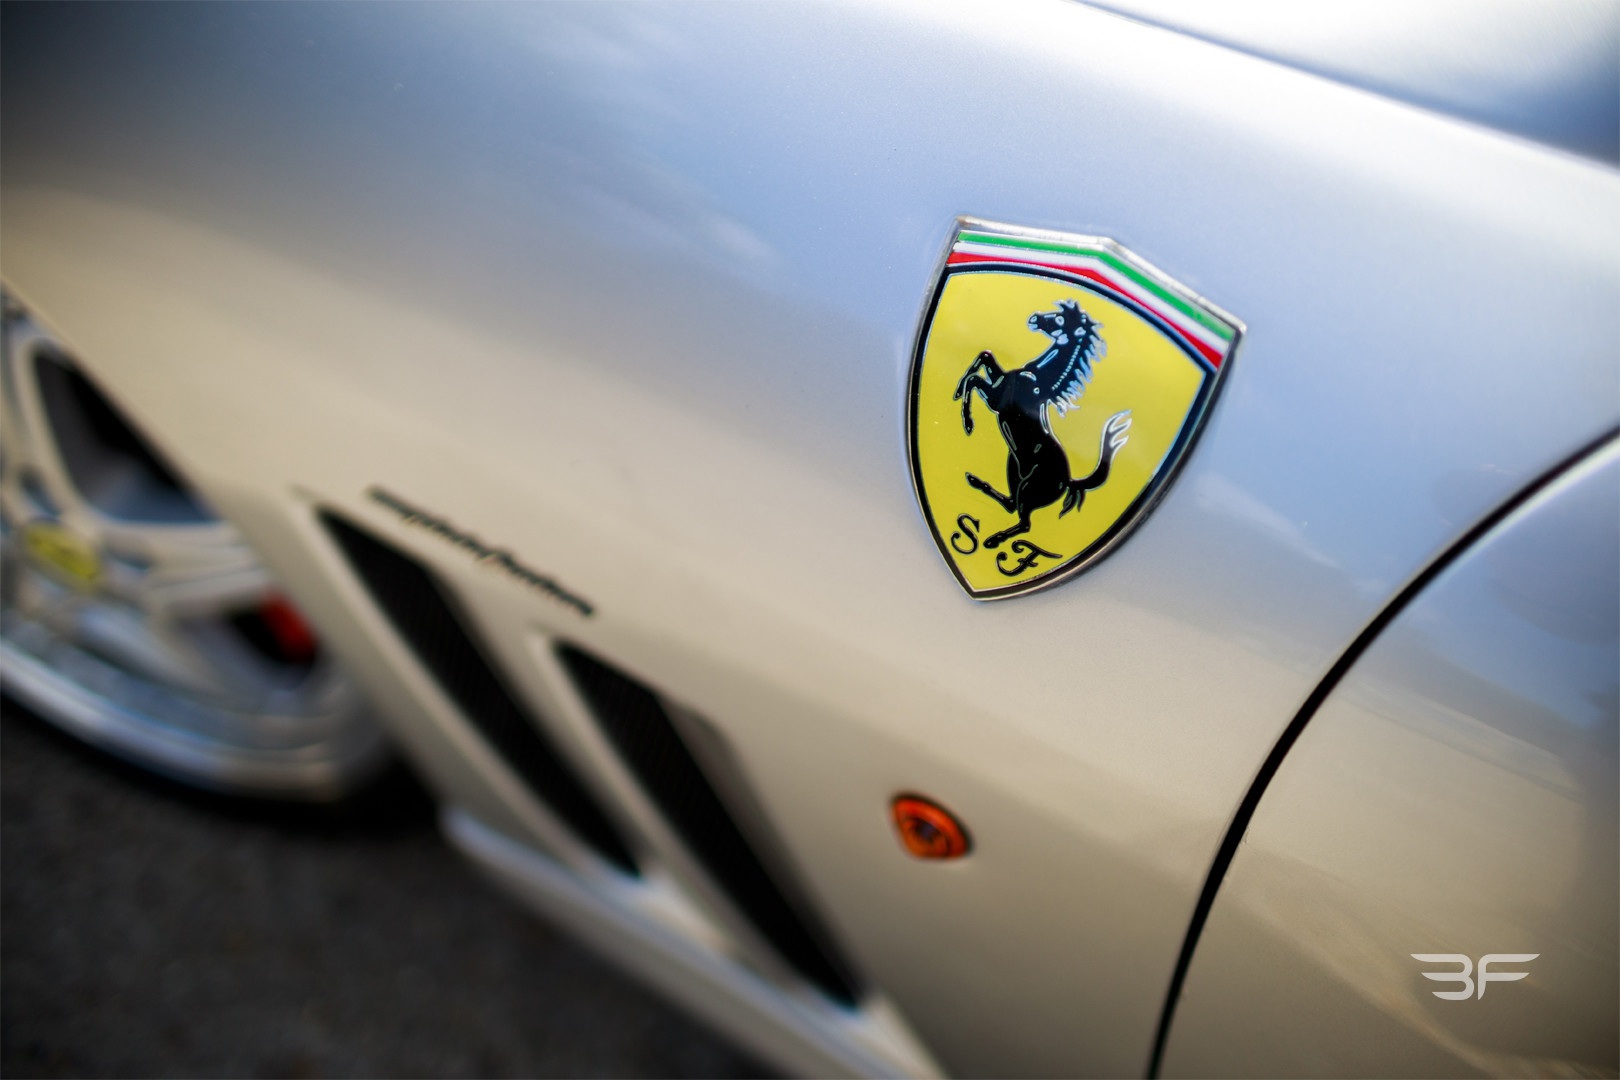 Ferrari 550 maranello for sale at barkaways 1112203